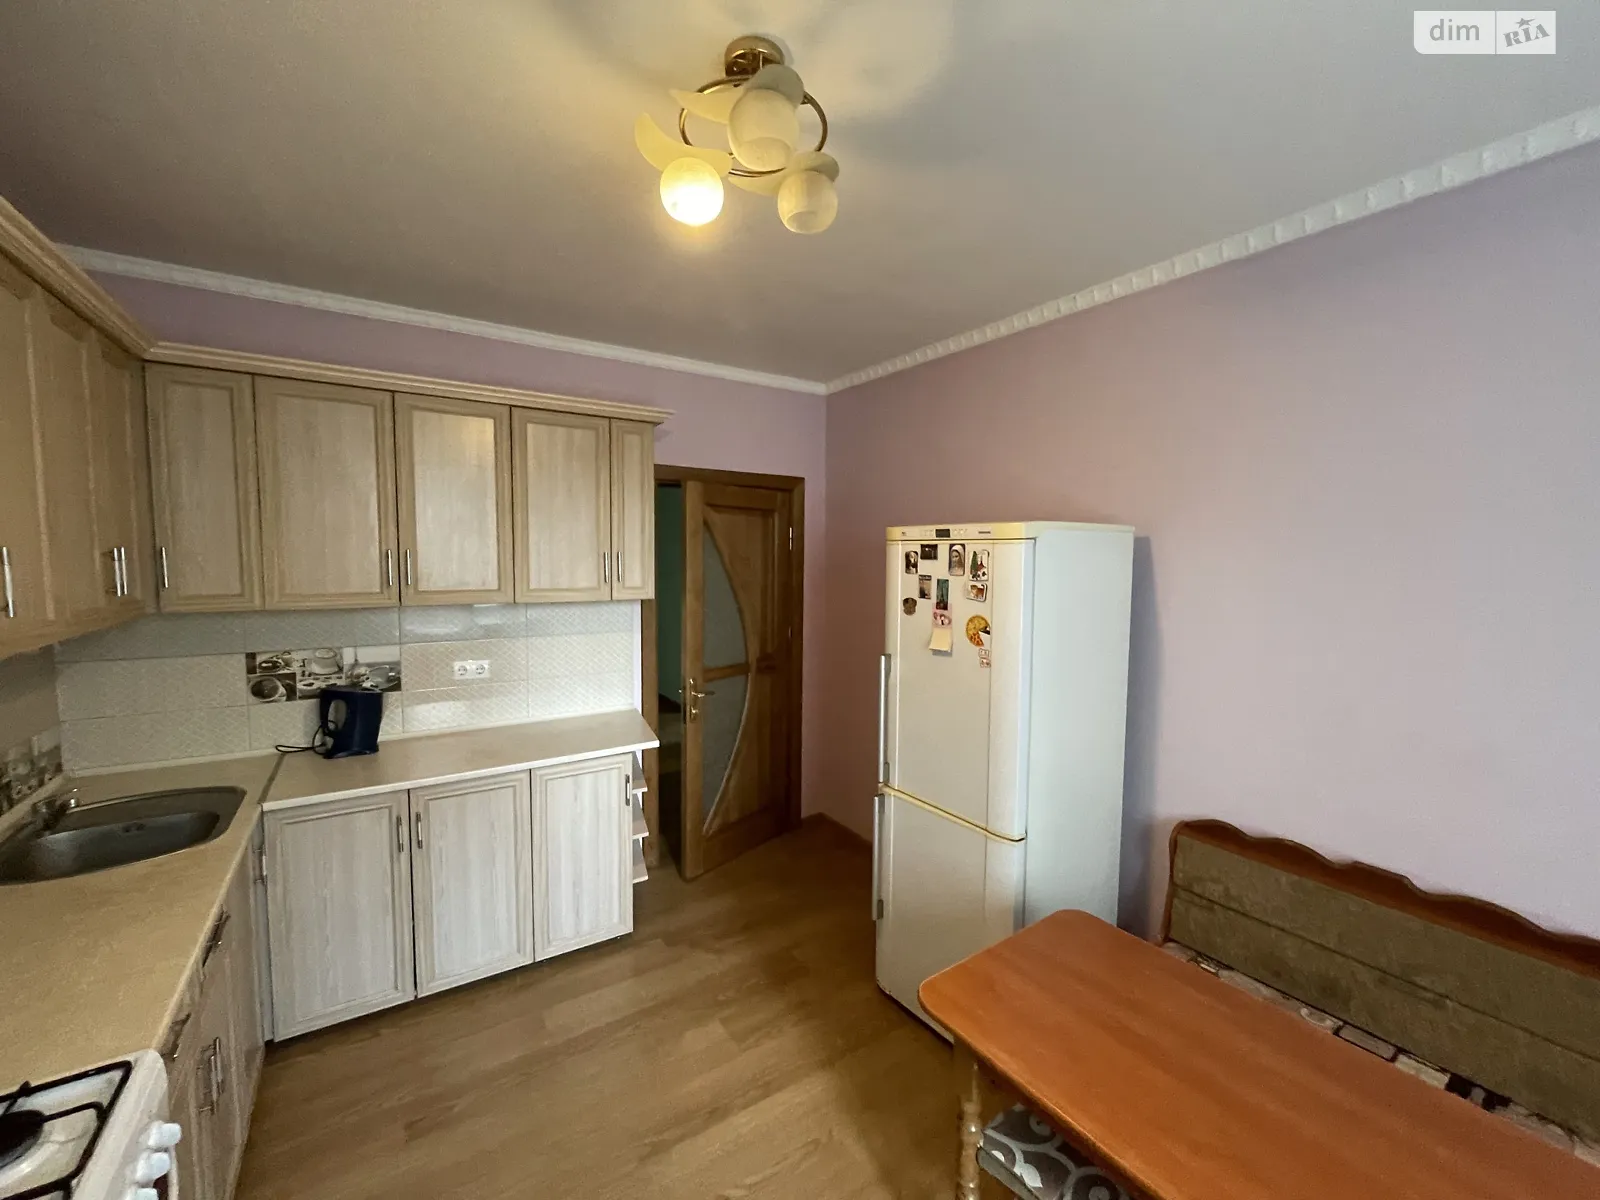 Продается 3-комнатная квартира 81.5 кв. м в Ивано-Франковске - фото 2